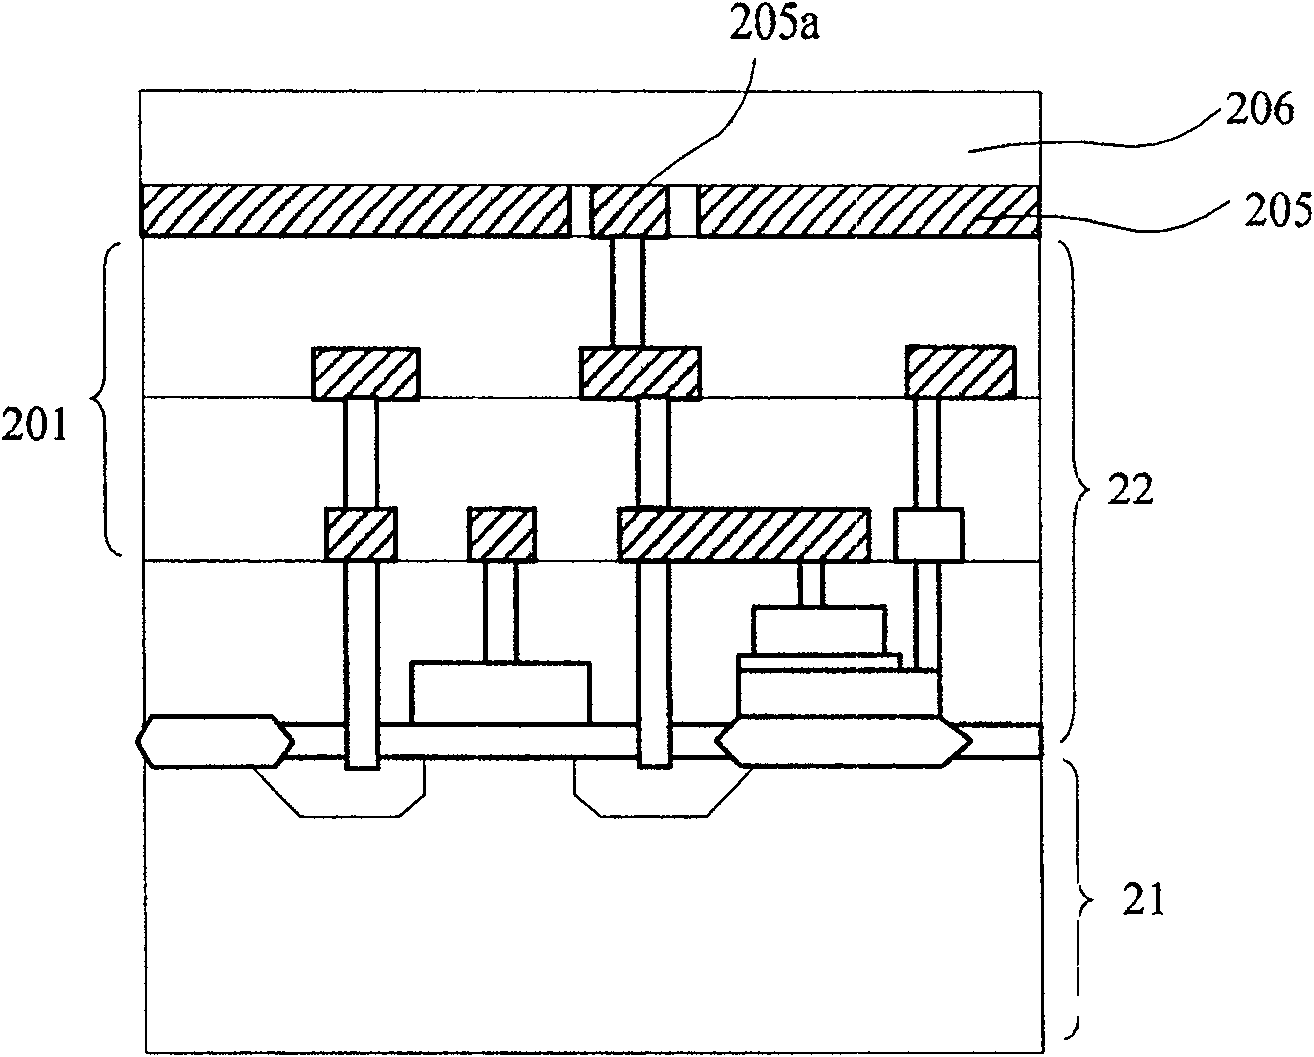 Silicon based LCD micro- display and method for forming same